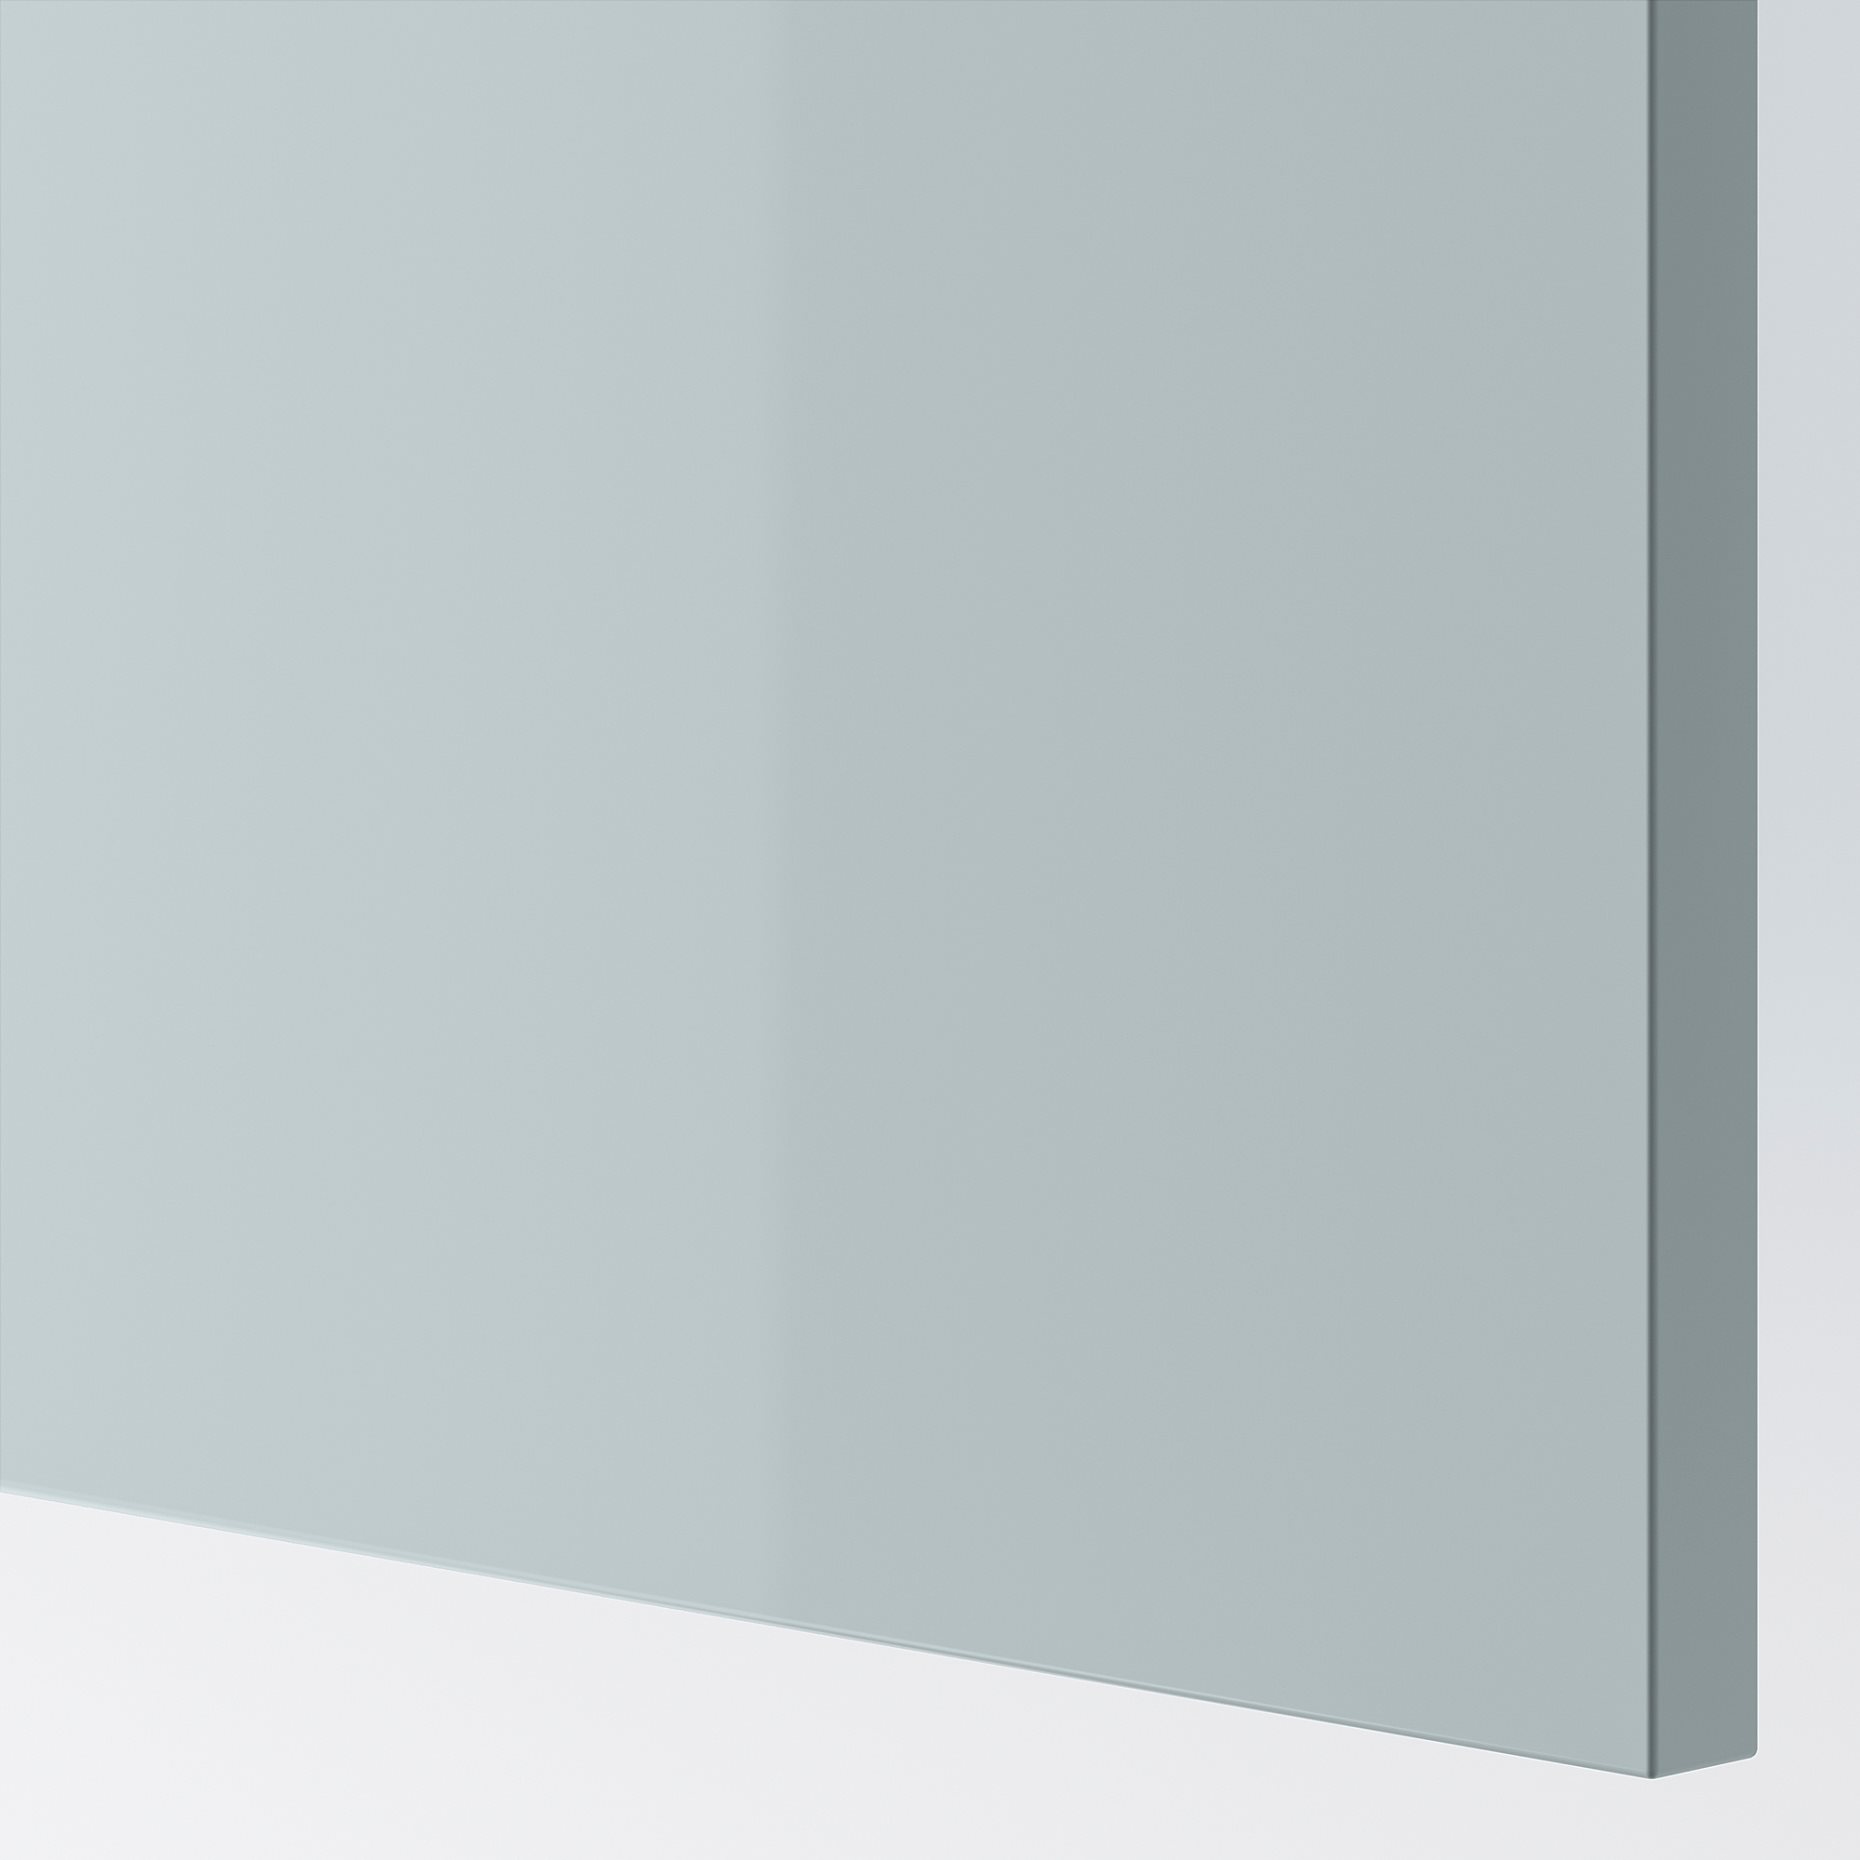 KALLARP, cover panel/high-gloss, 62x240 cm, 005.201.33